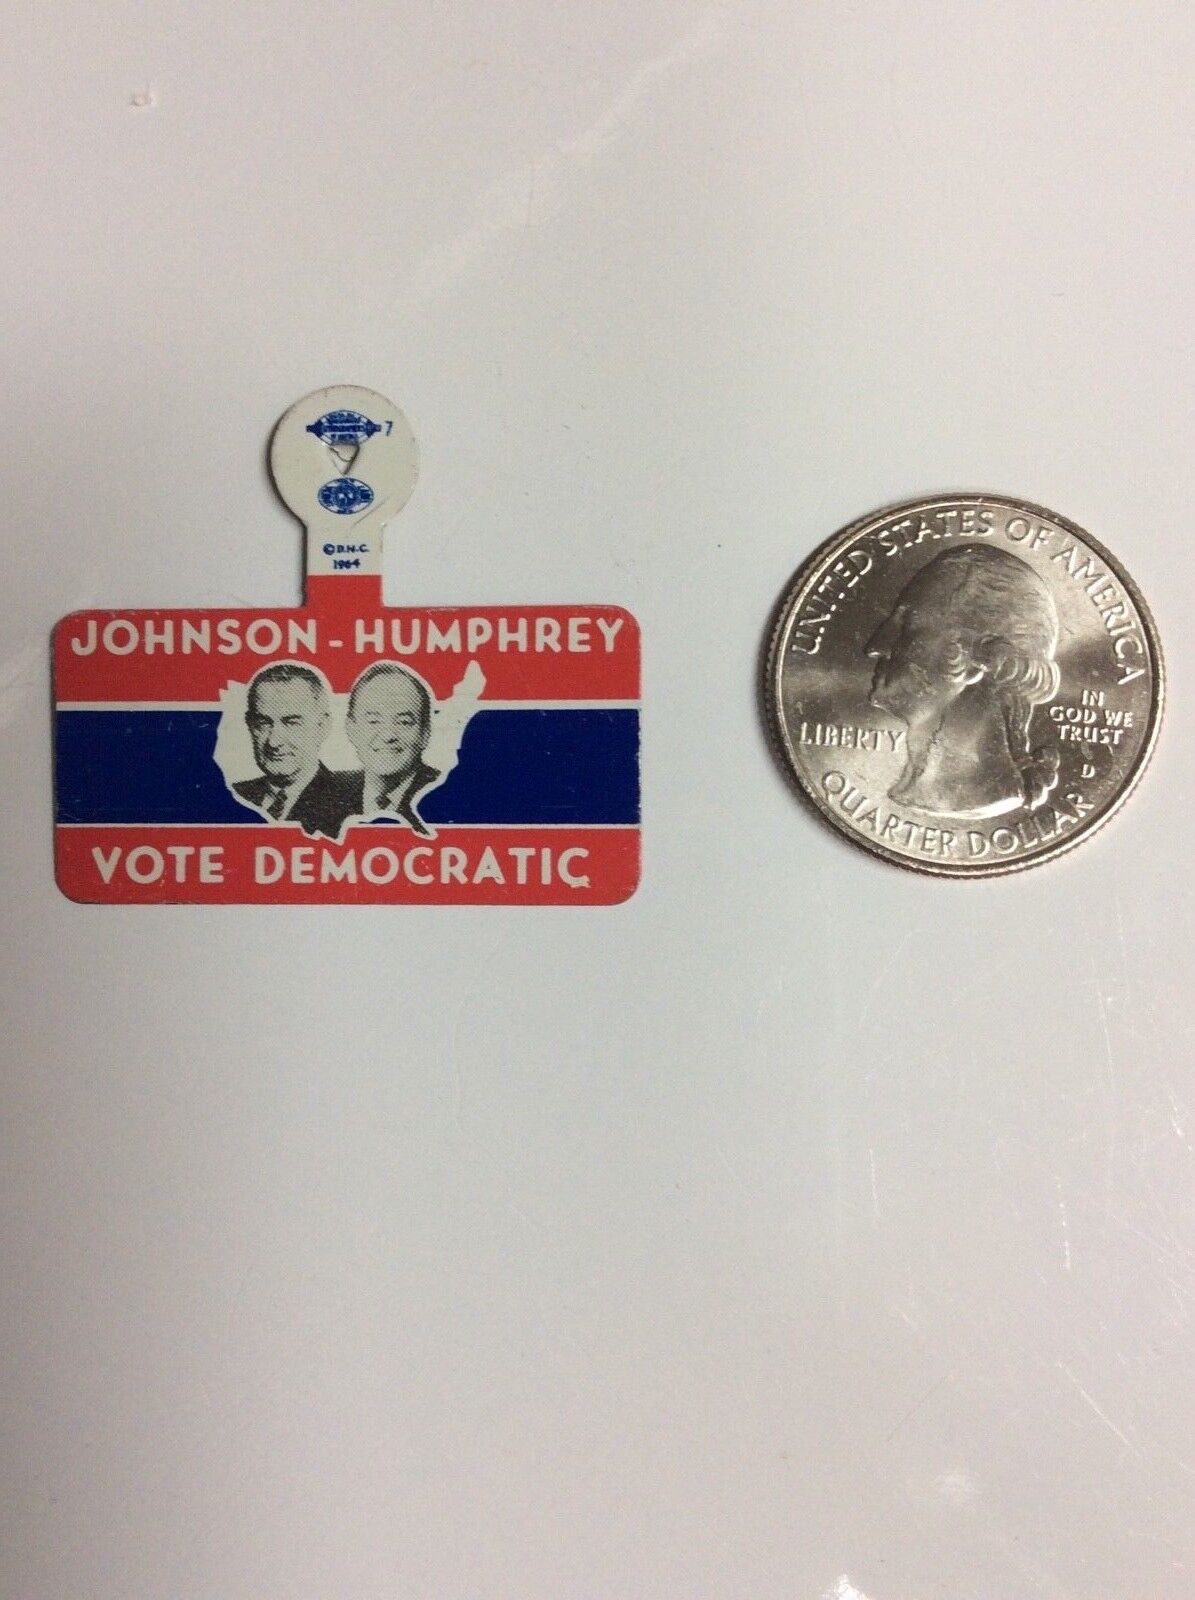 Vintage 1964 lapel clasp poltical Johnson - Humphrey for President Vote Democrat